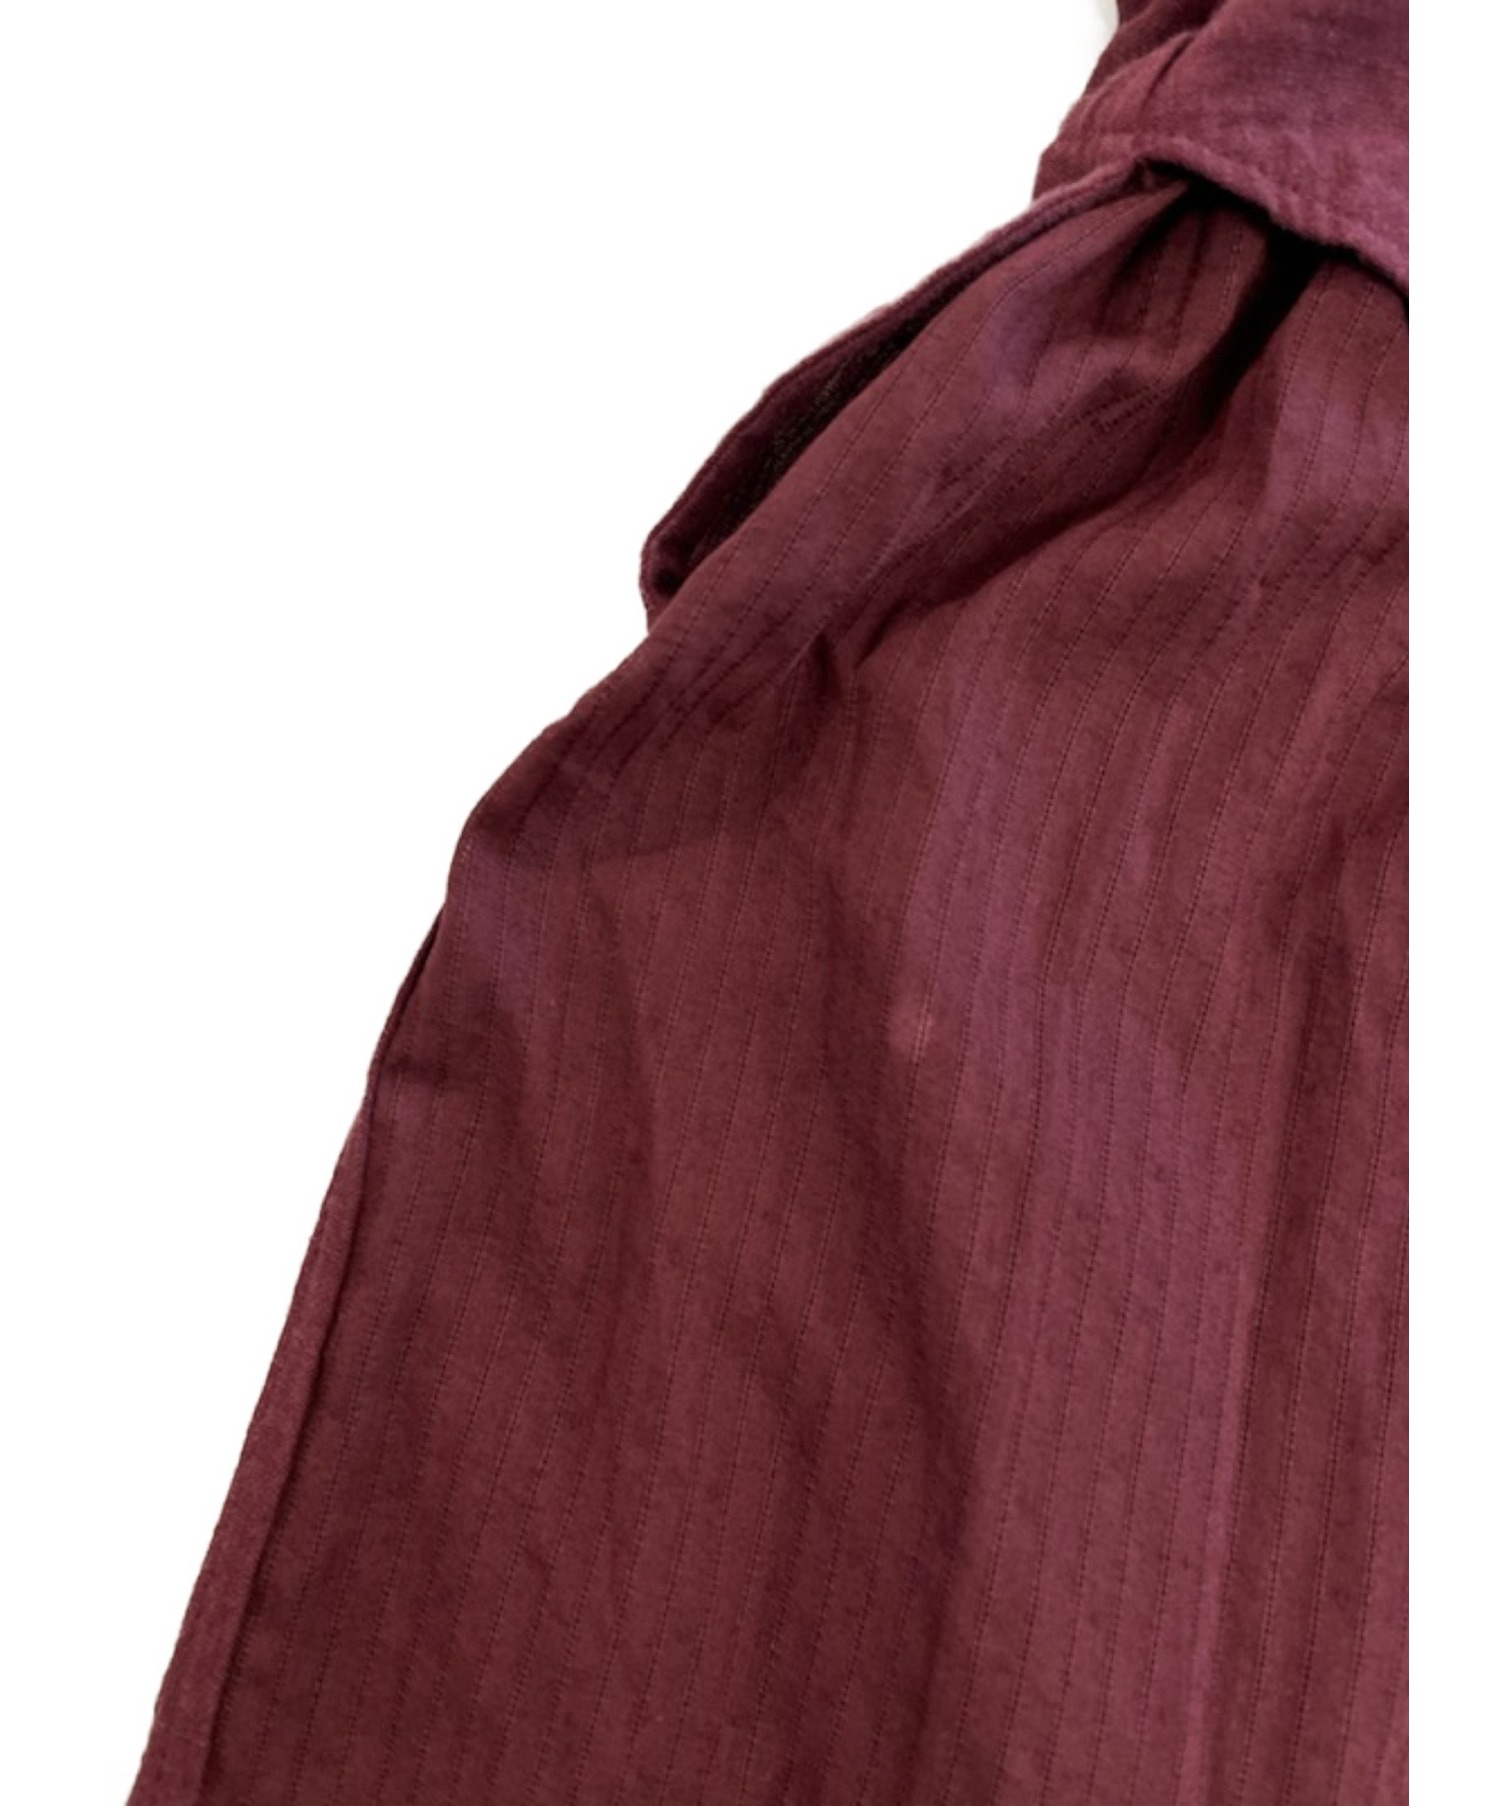 beautiful people (ビューティフルピープル) ボタニカルダイバスティエールドレス ピンク サイズ:34 1915104021  botanical dye switch bustier dress